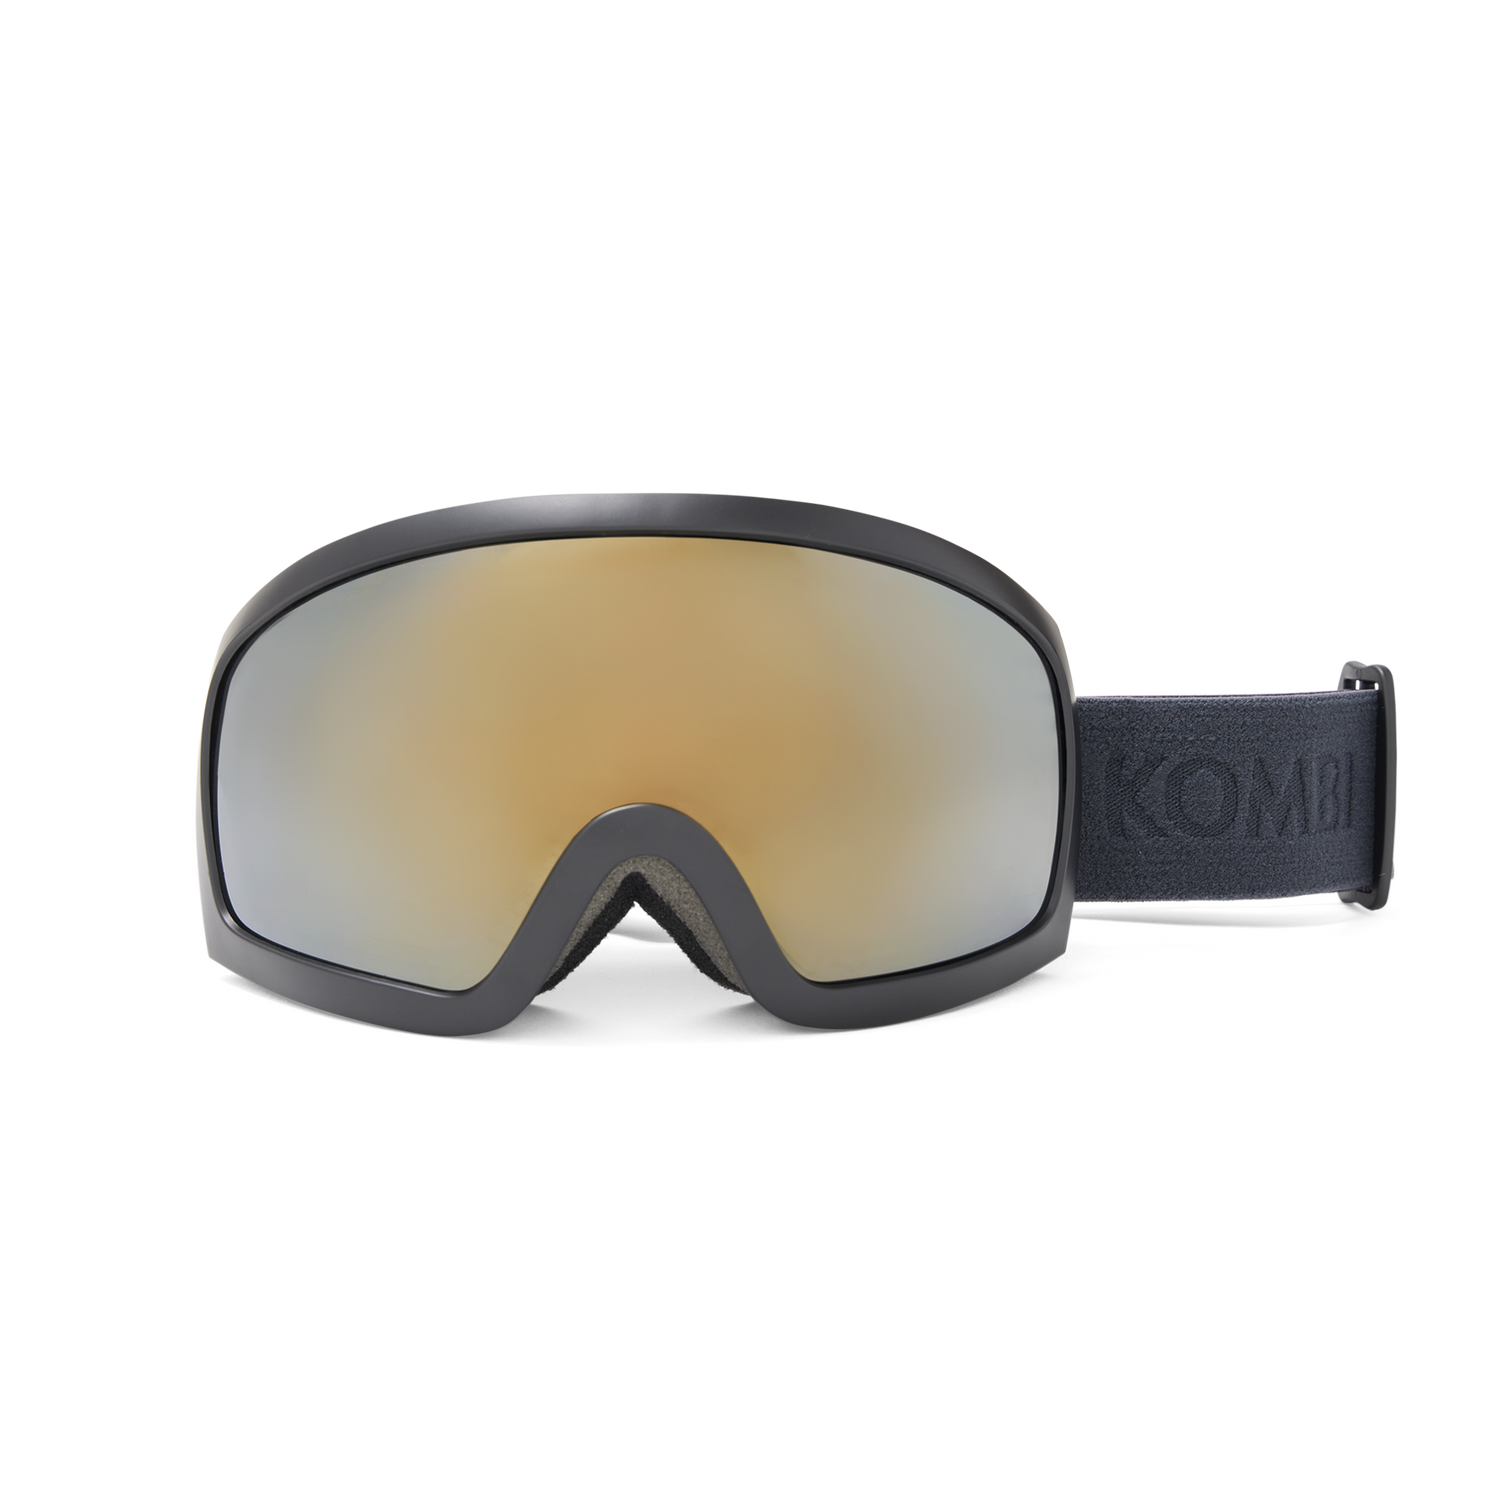 Perception M/L Ski Goggles for Strong Sunlight – KOMBI ™ Canada